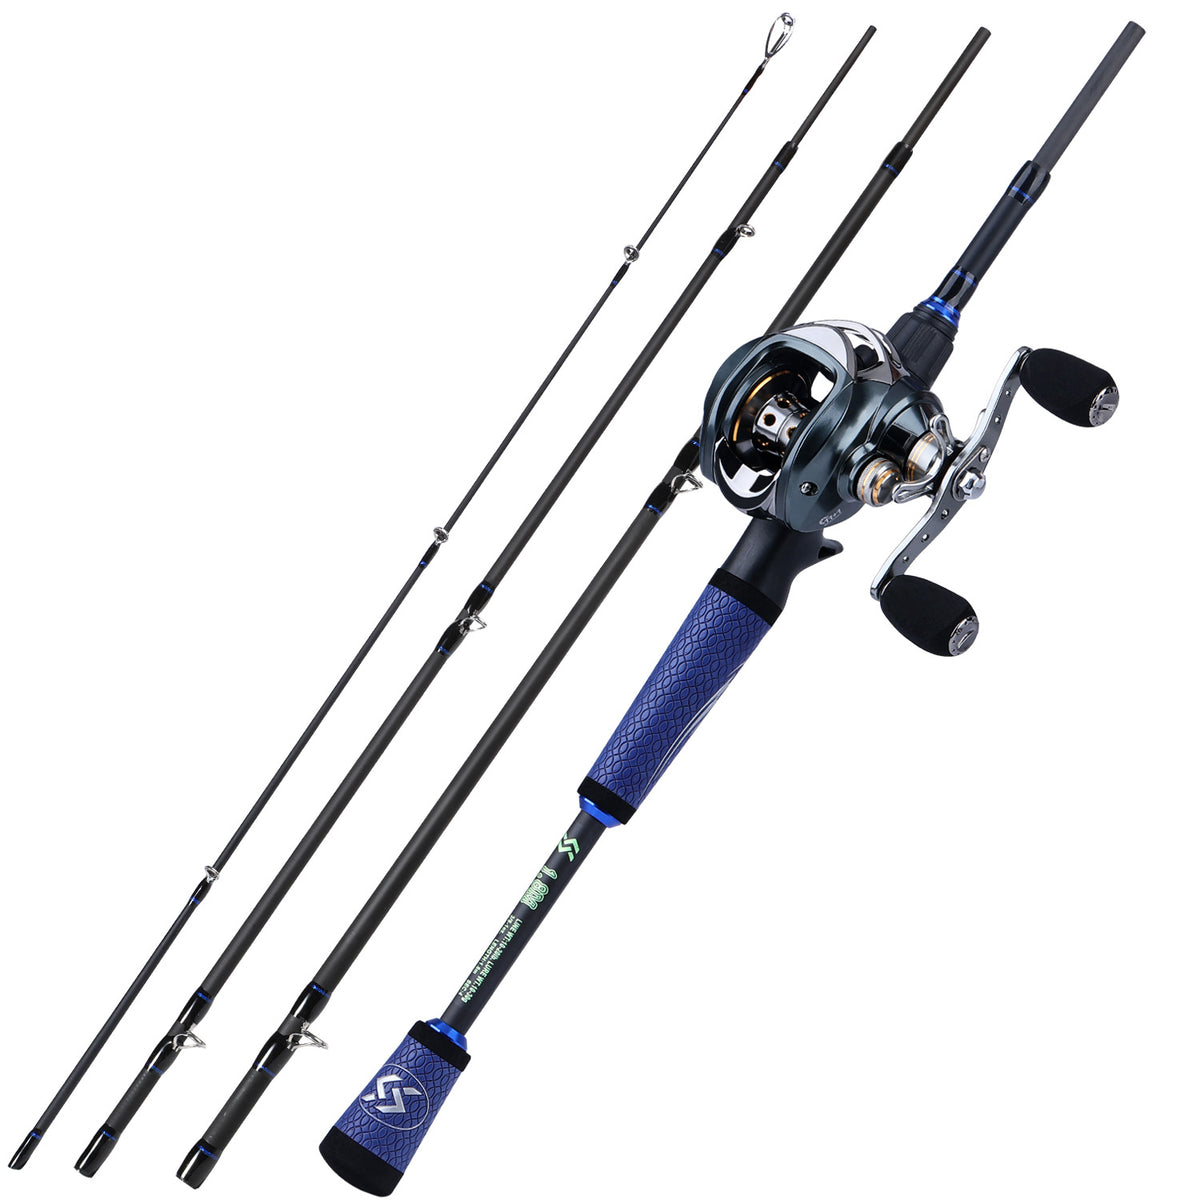 Sougayilang 1.8m- 2.4m Casting Fishing Rod Portable 4 Section Carbon Fiber  Fishingrod with 11+1BB 7.0:1 Baitcasting Fishing Reel